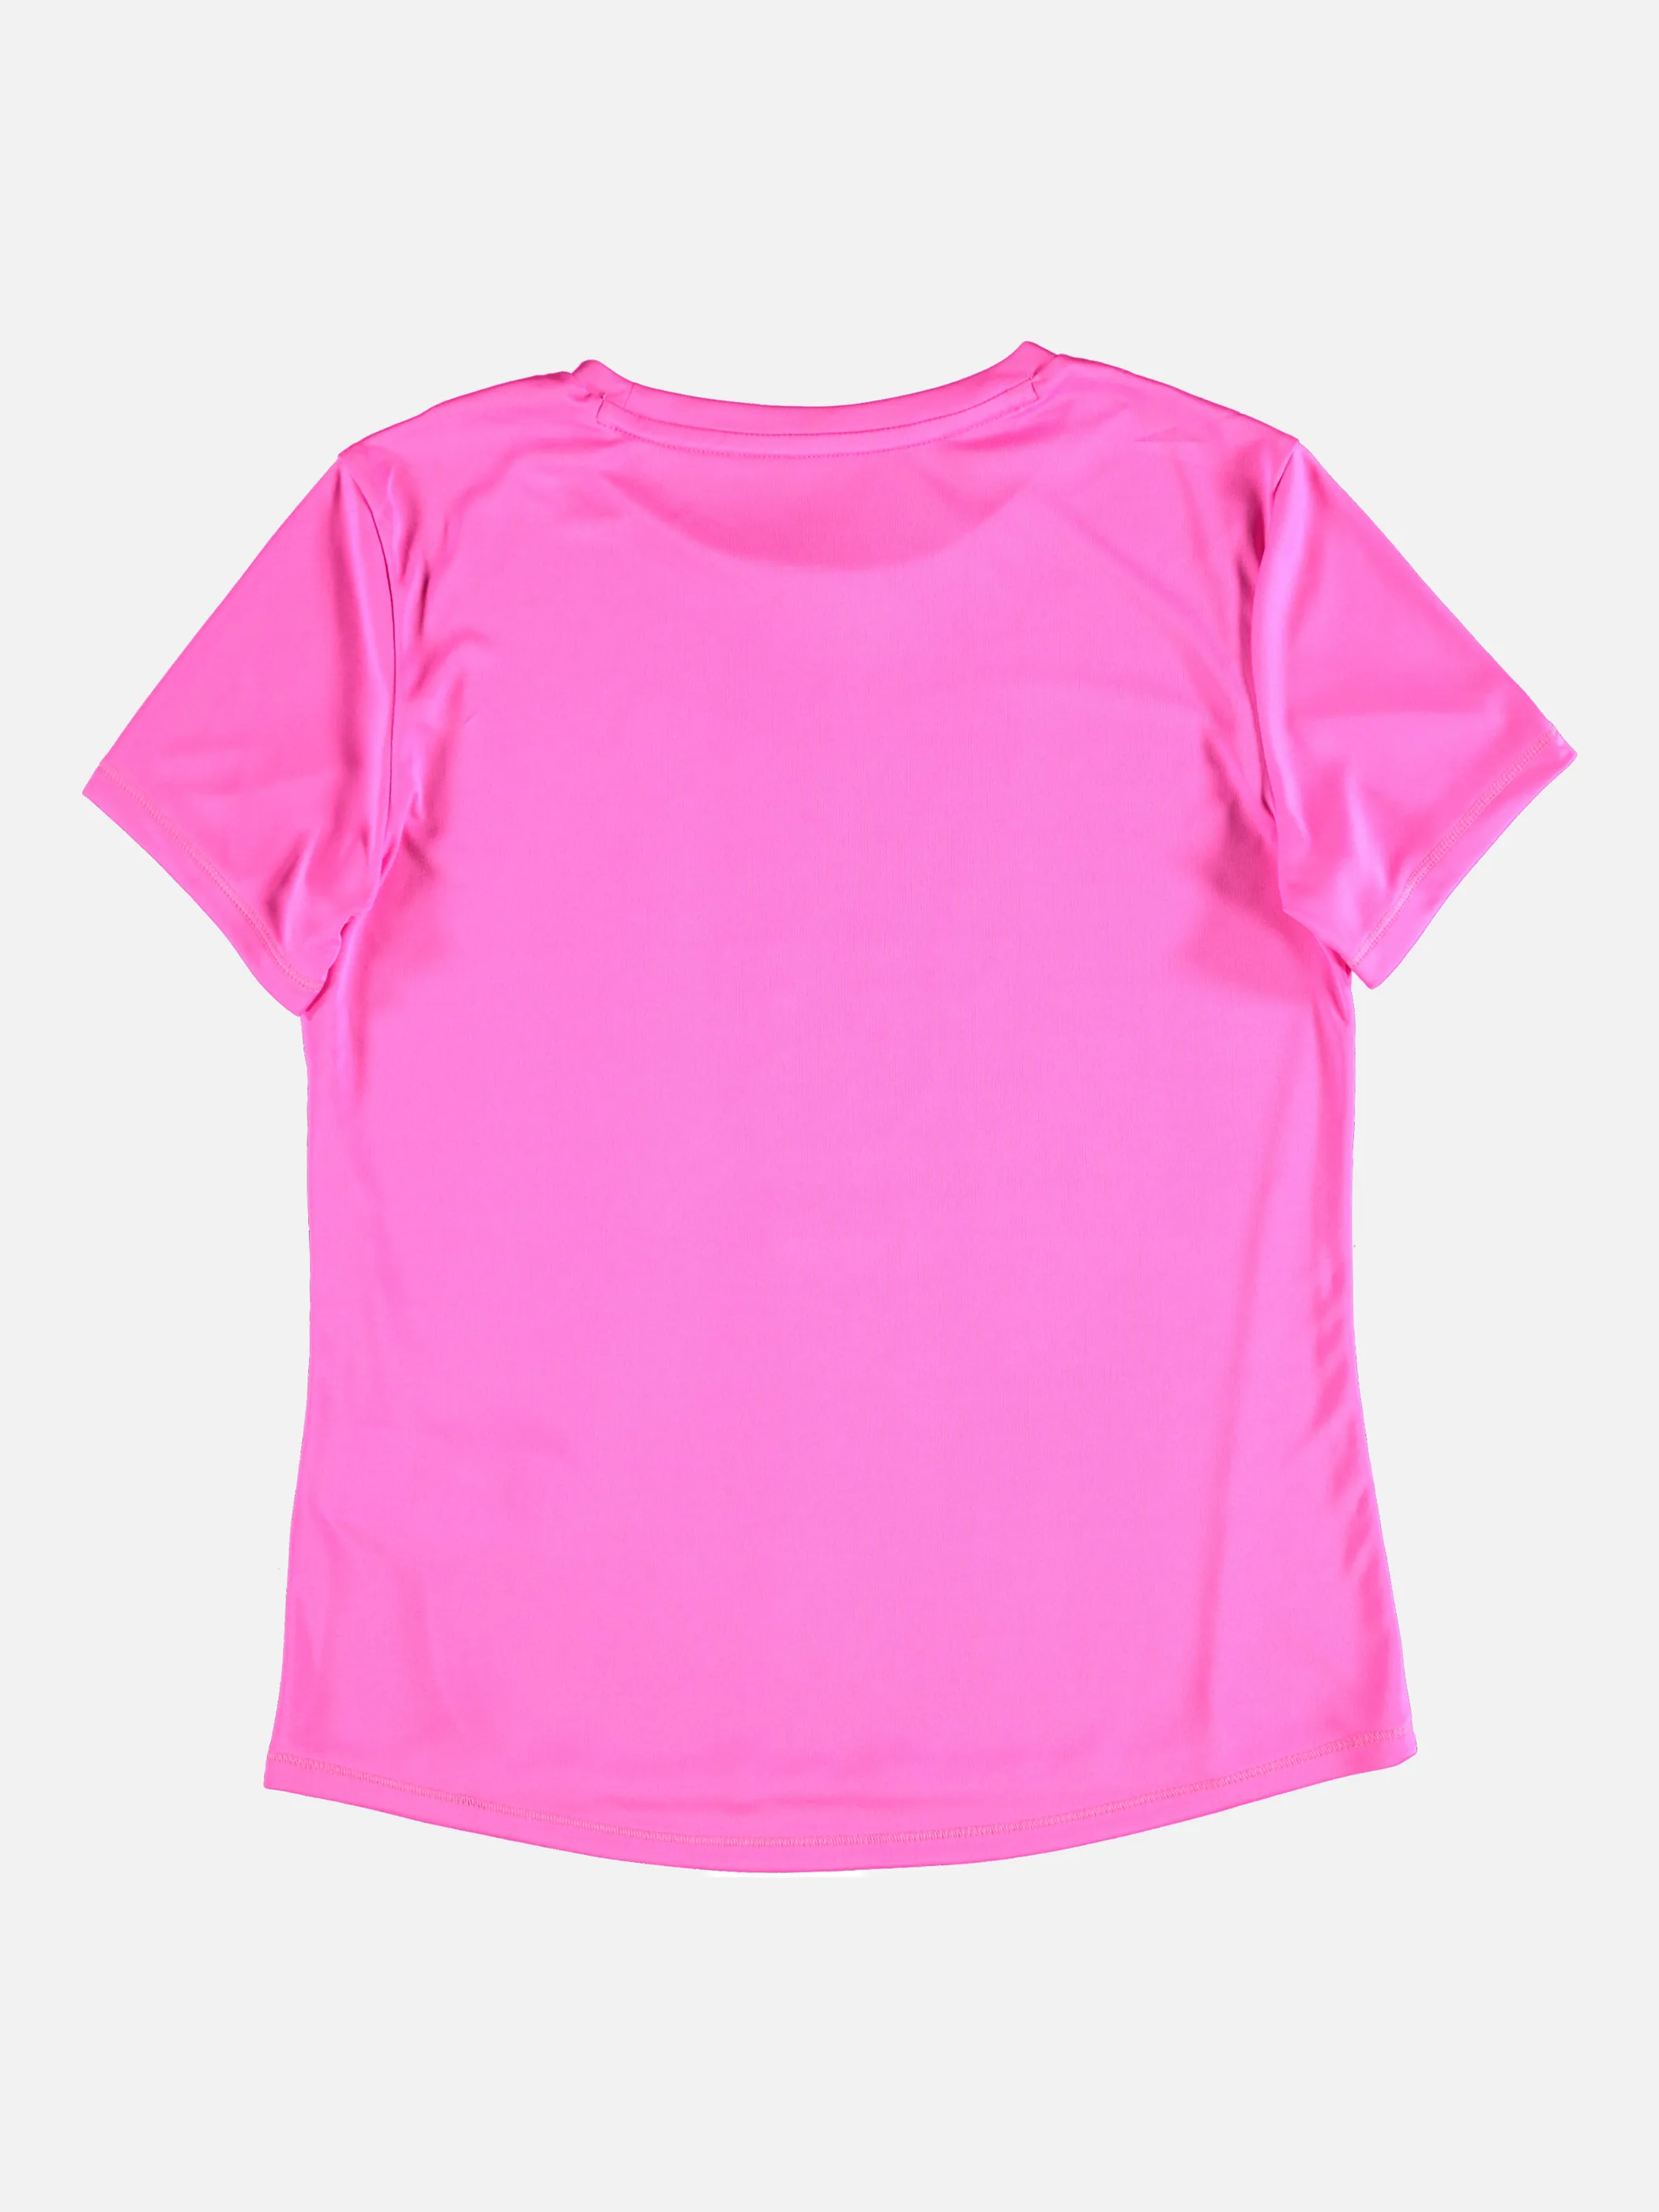 Puma 583331 Md-Logo-Shirt Pink 839185 24 2